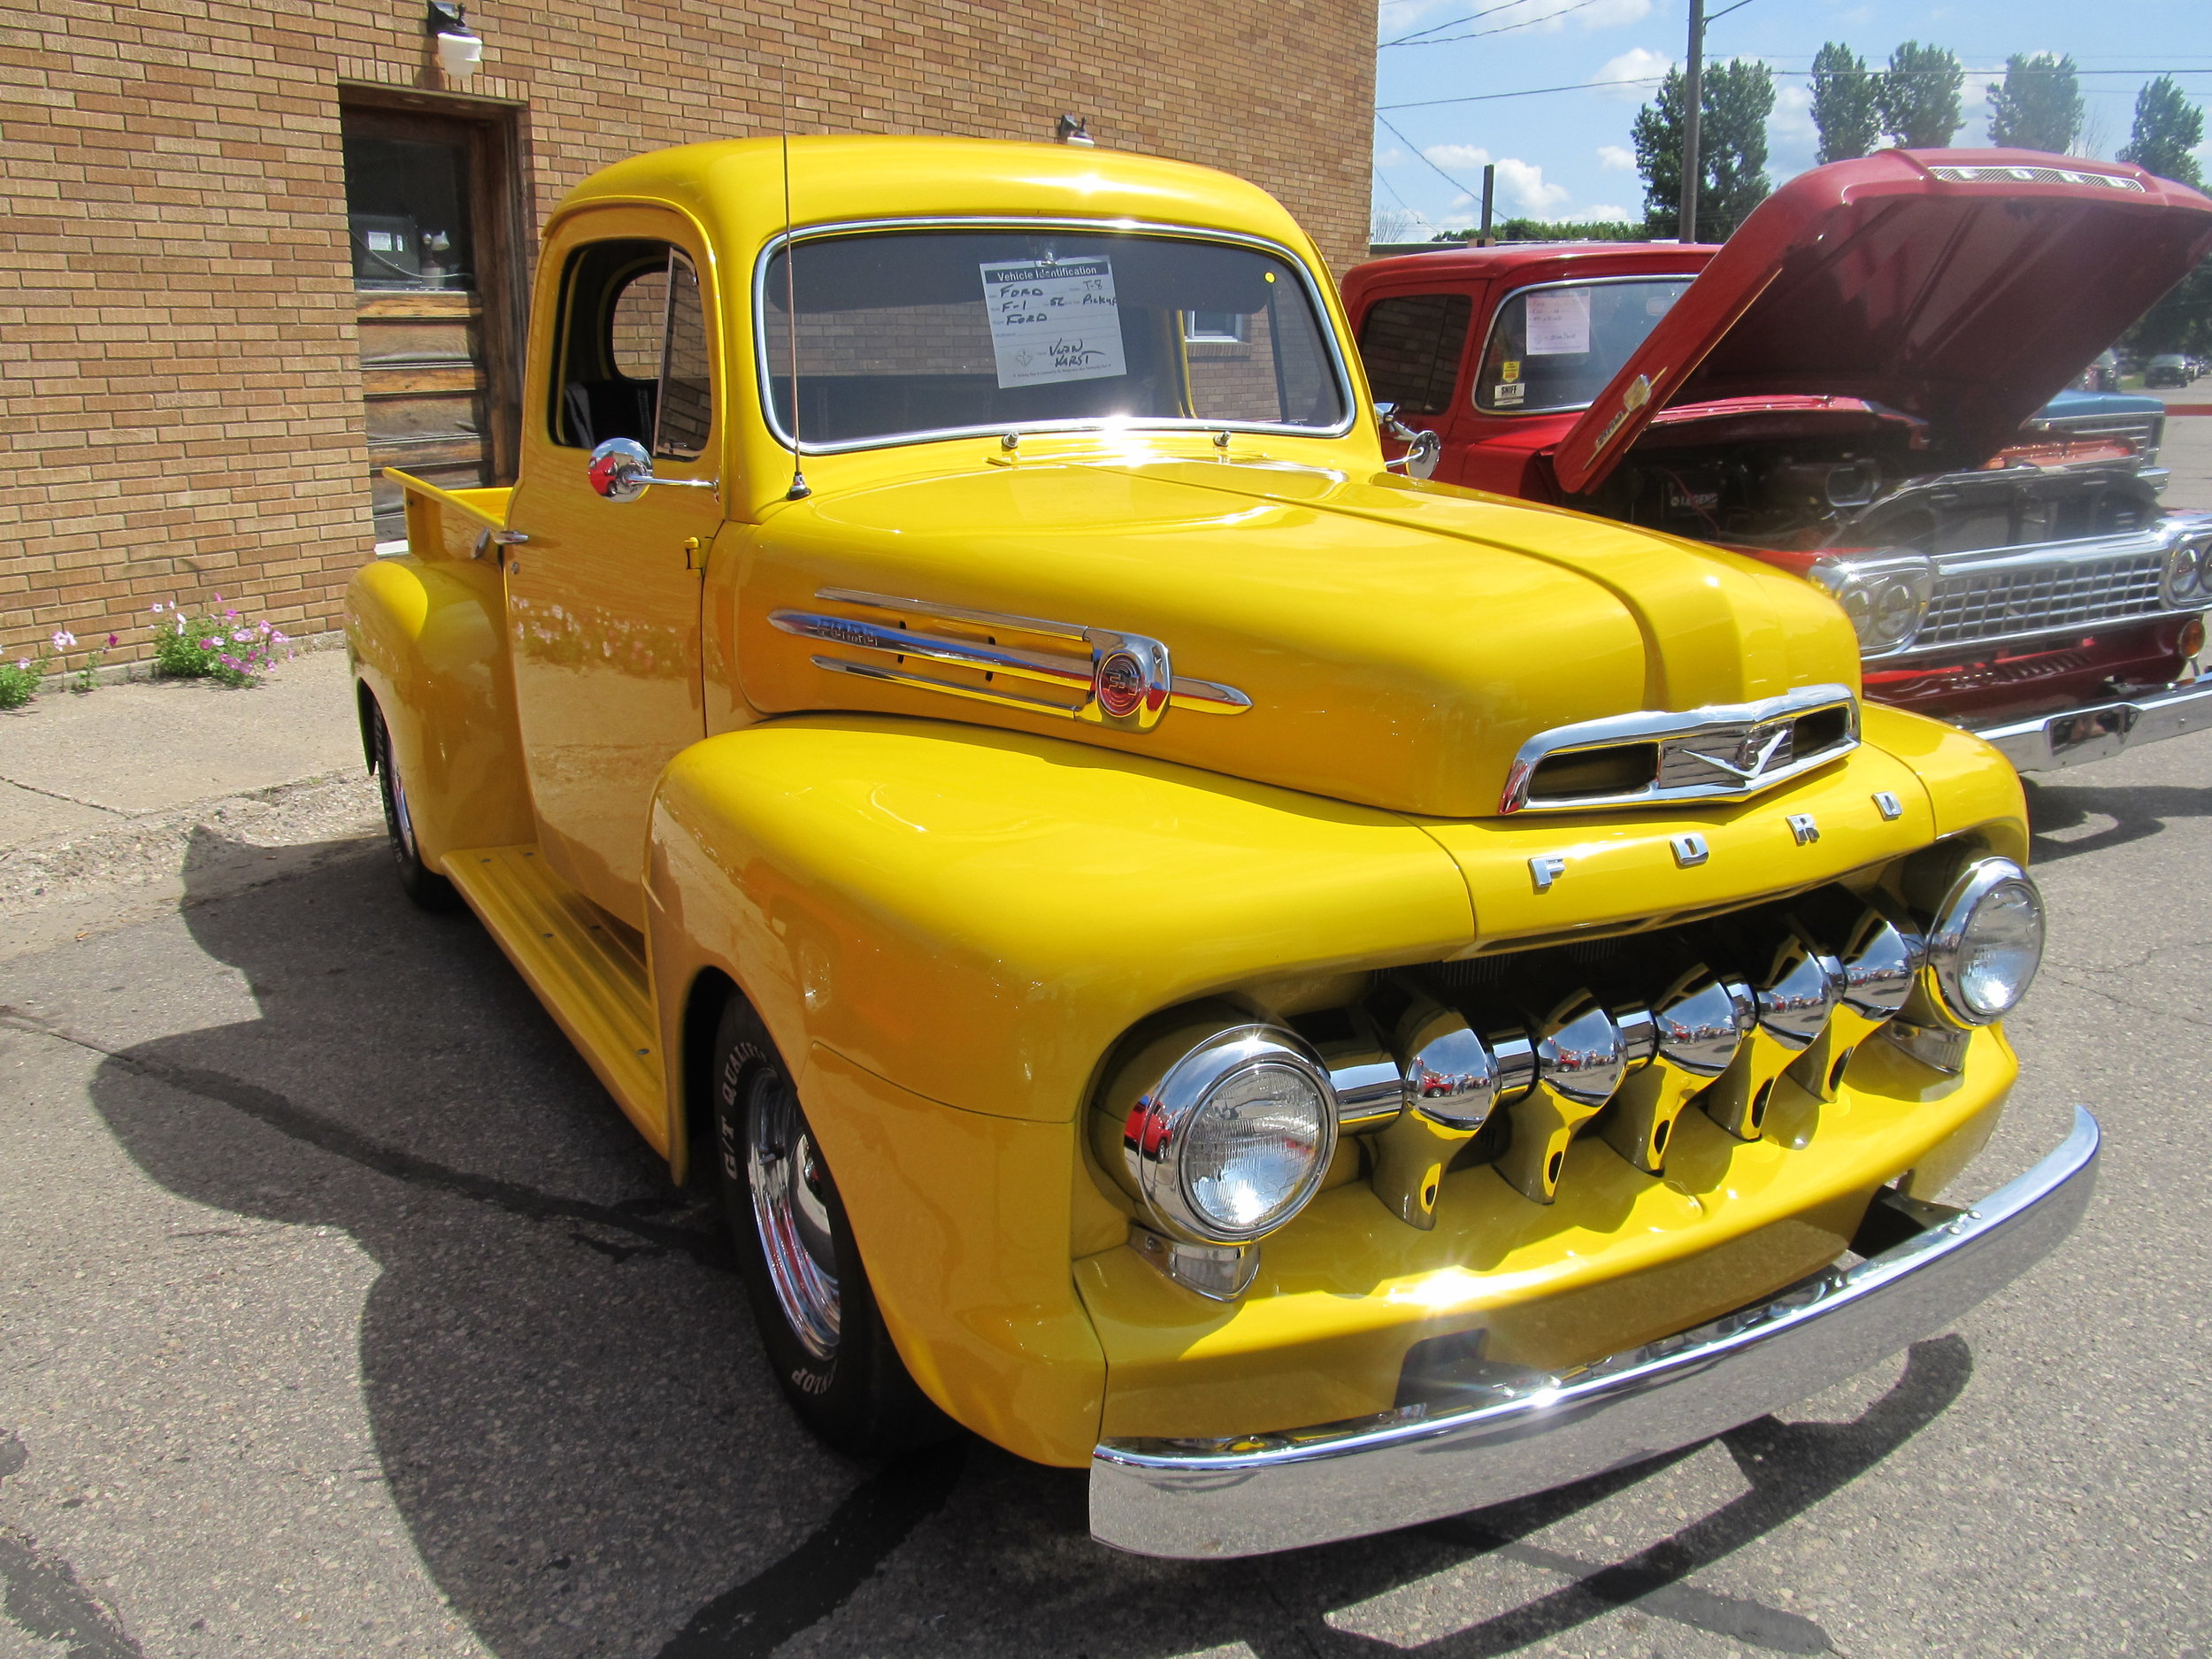 AE - JUDD -Kolacky days car show- yellow truck.jpg